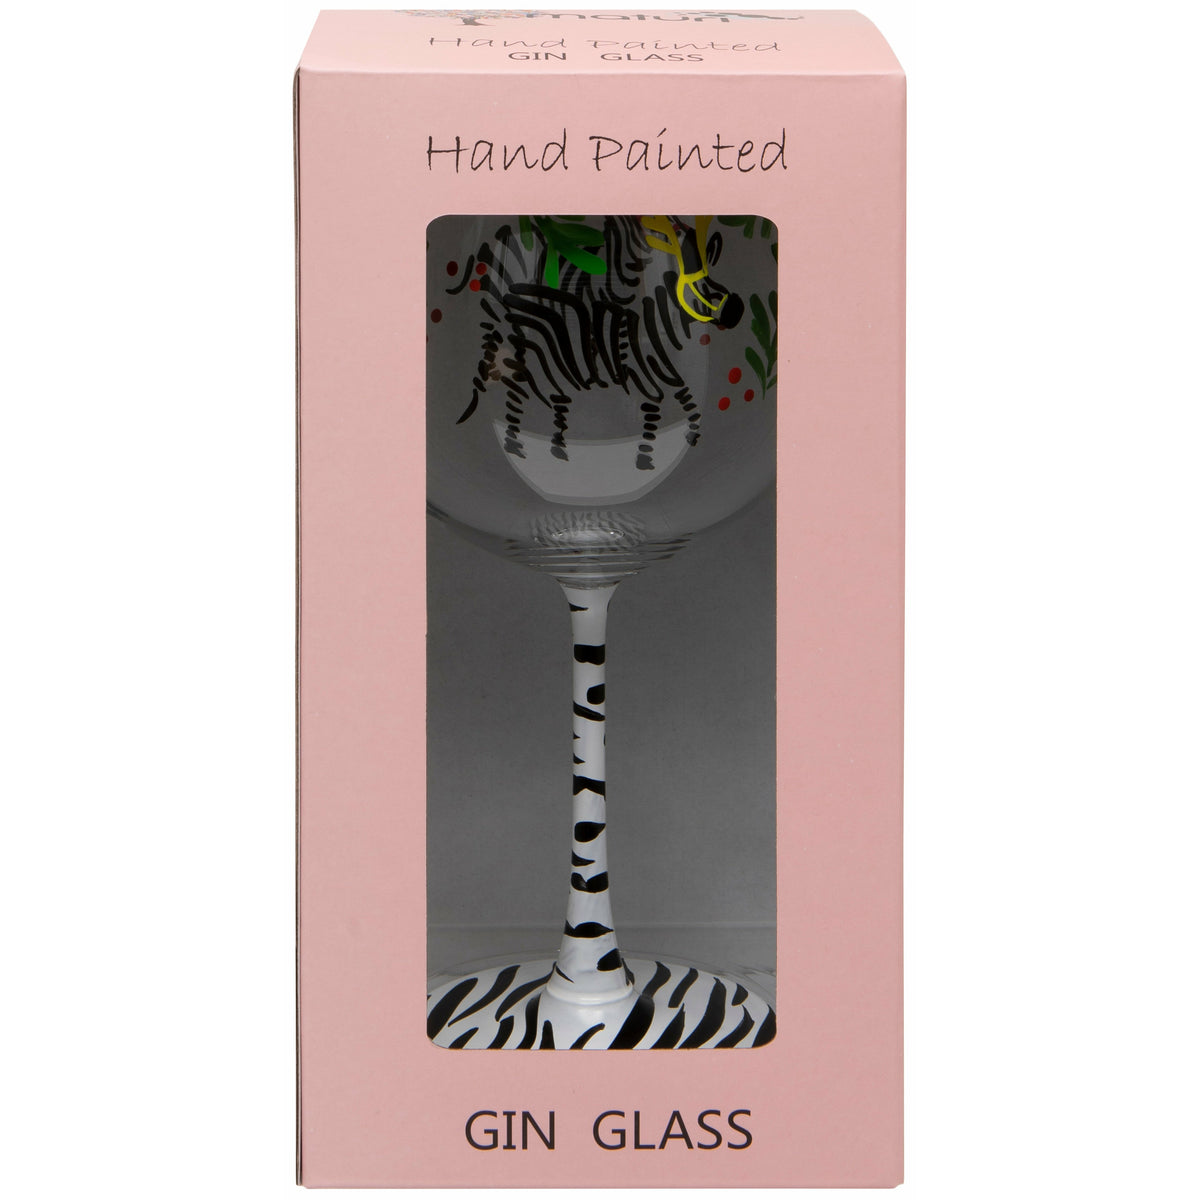 Hand Painted Zebra Gin Glass in Box